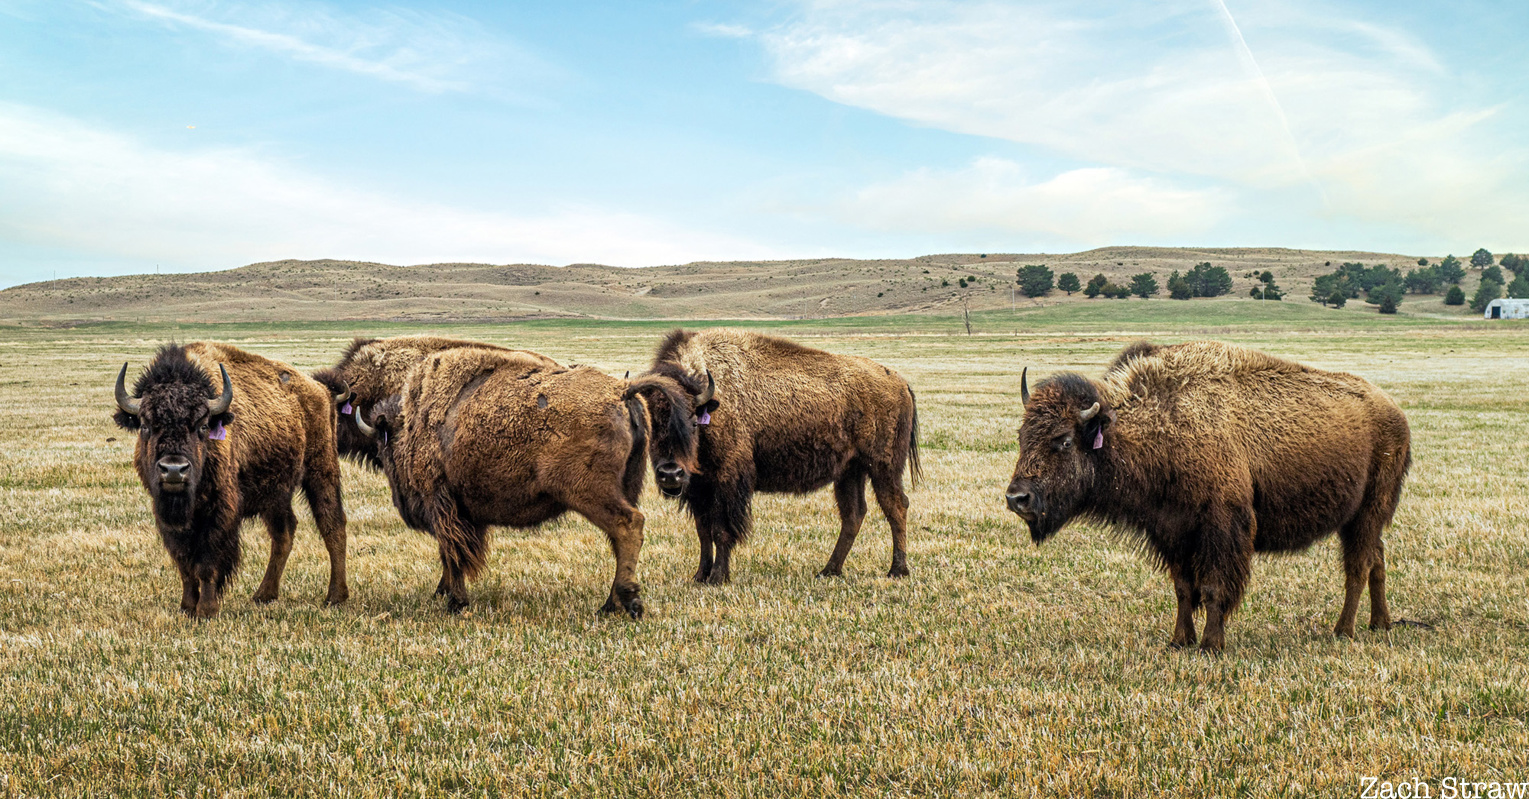 Bison on the plains